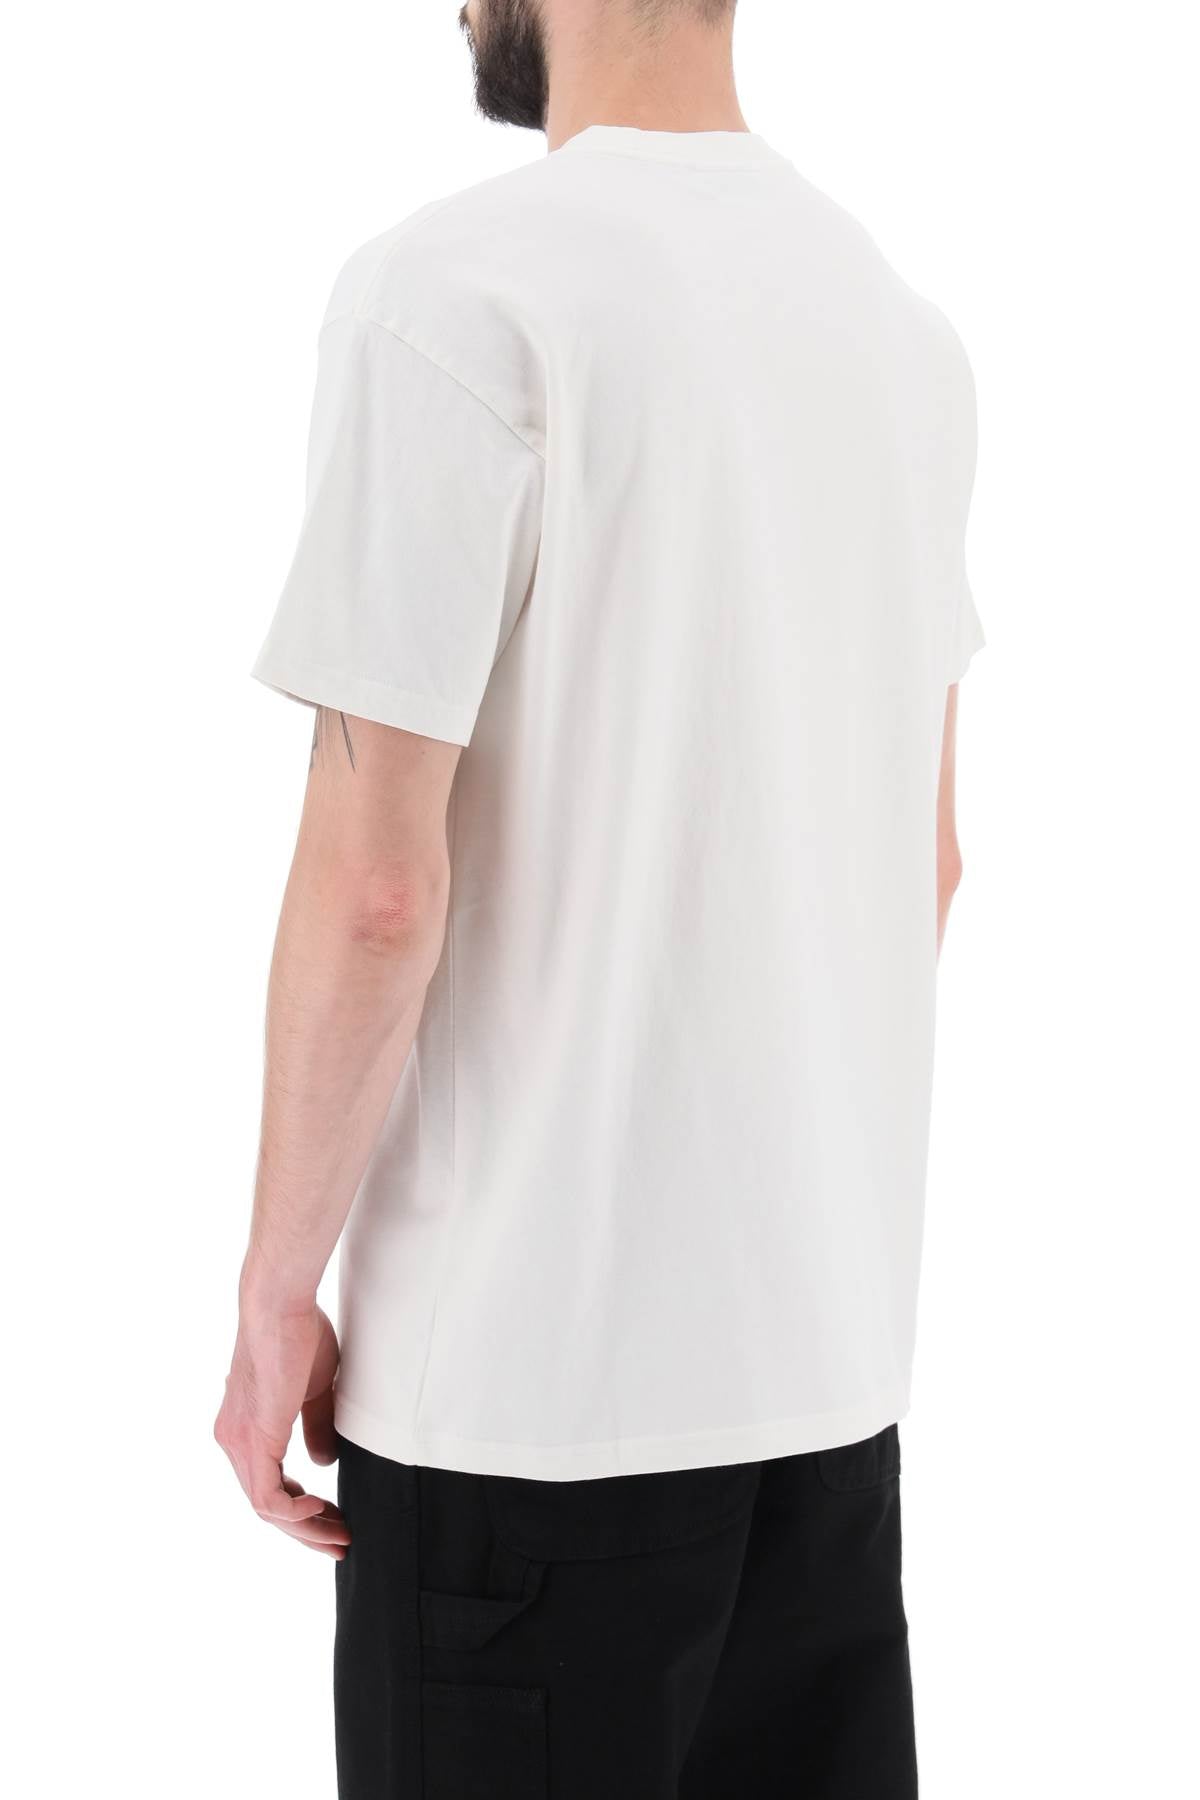 Shop Carhartt Duster T Shirt In White